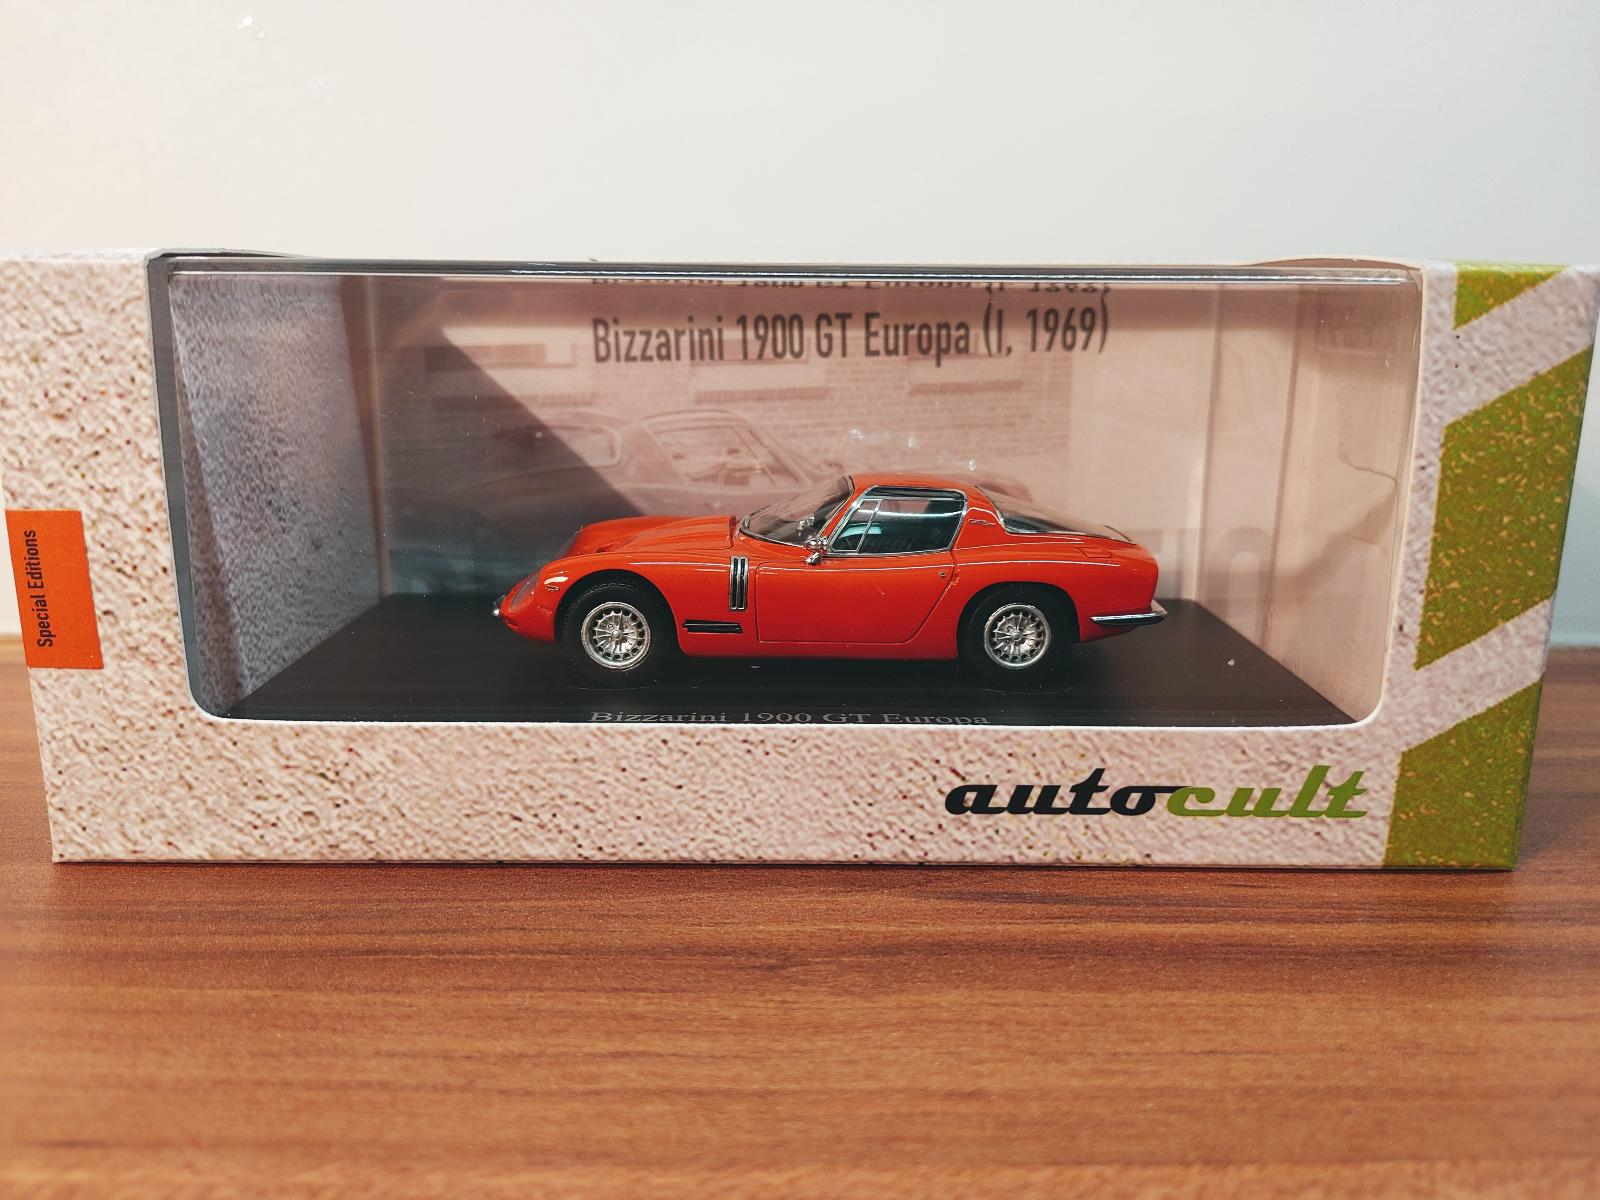 Autocult 1:43 Bizzarrini 1900 GT Europa (I, 1969) | Aukro